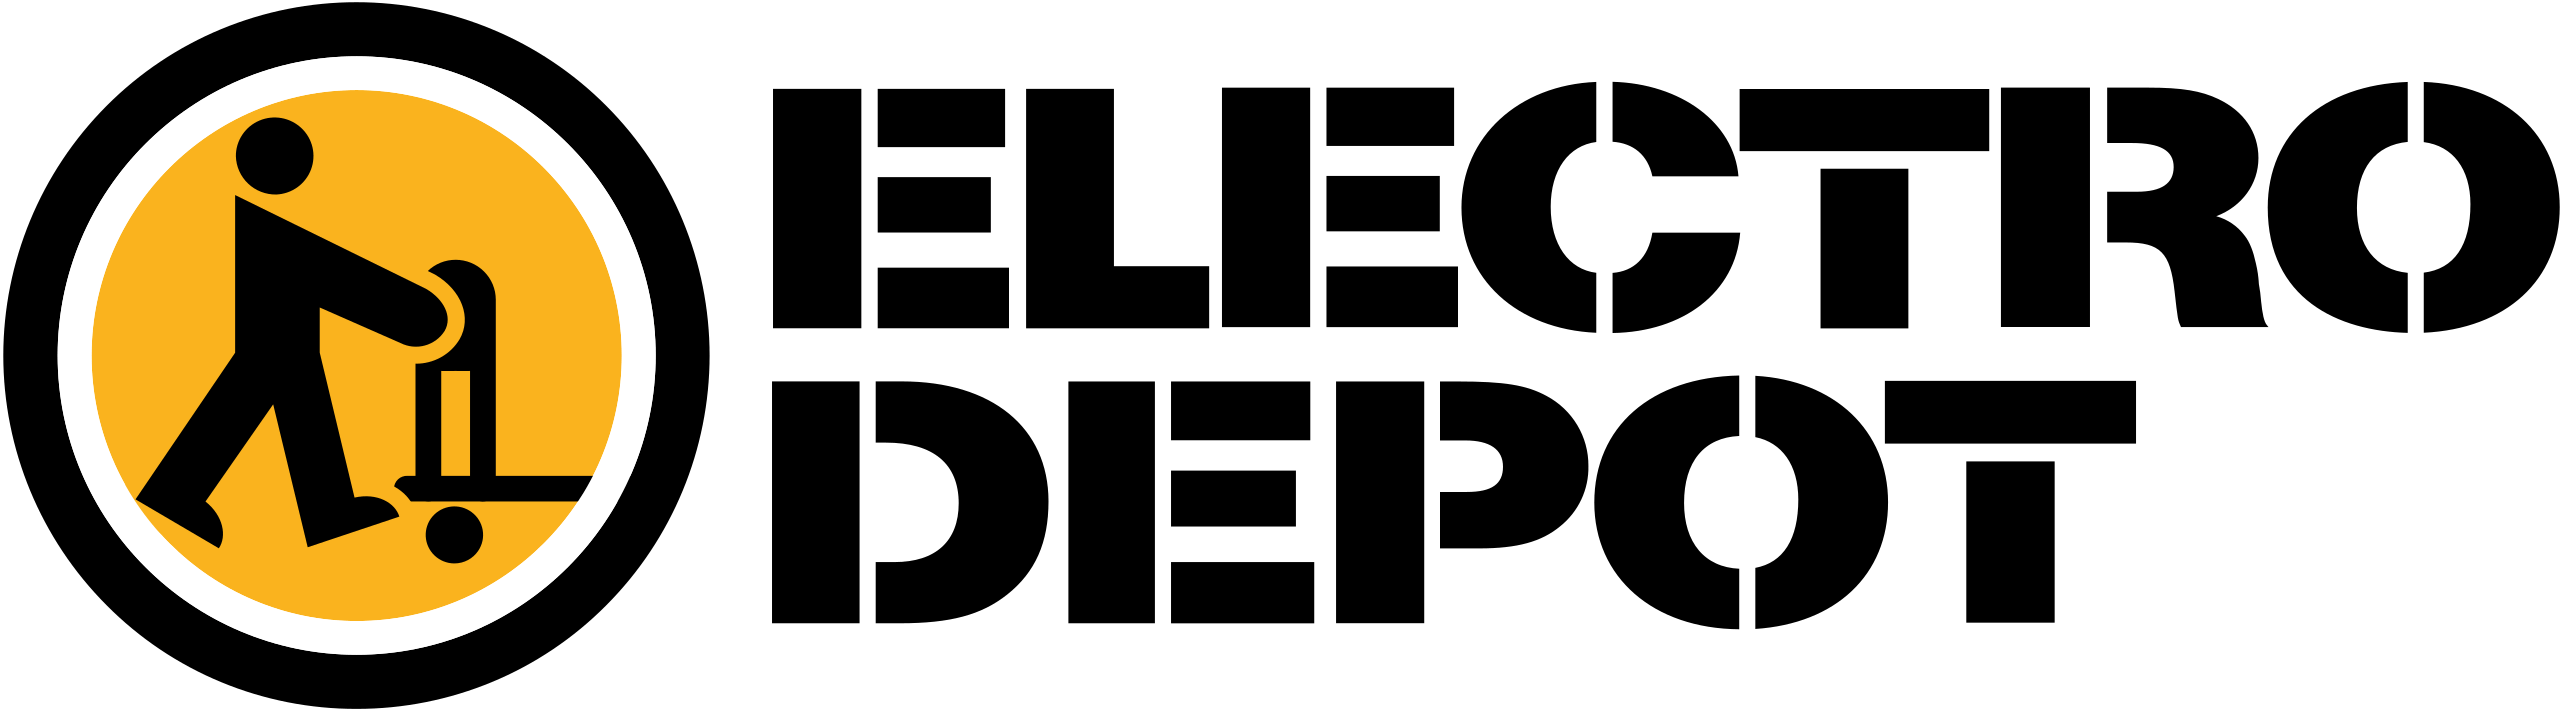 Electro depot logo